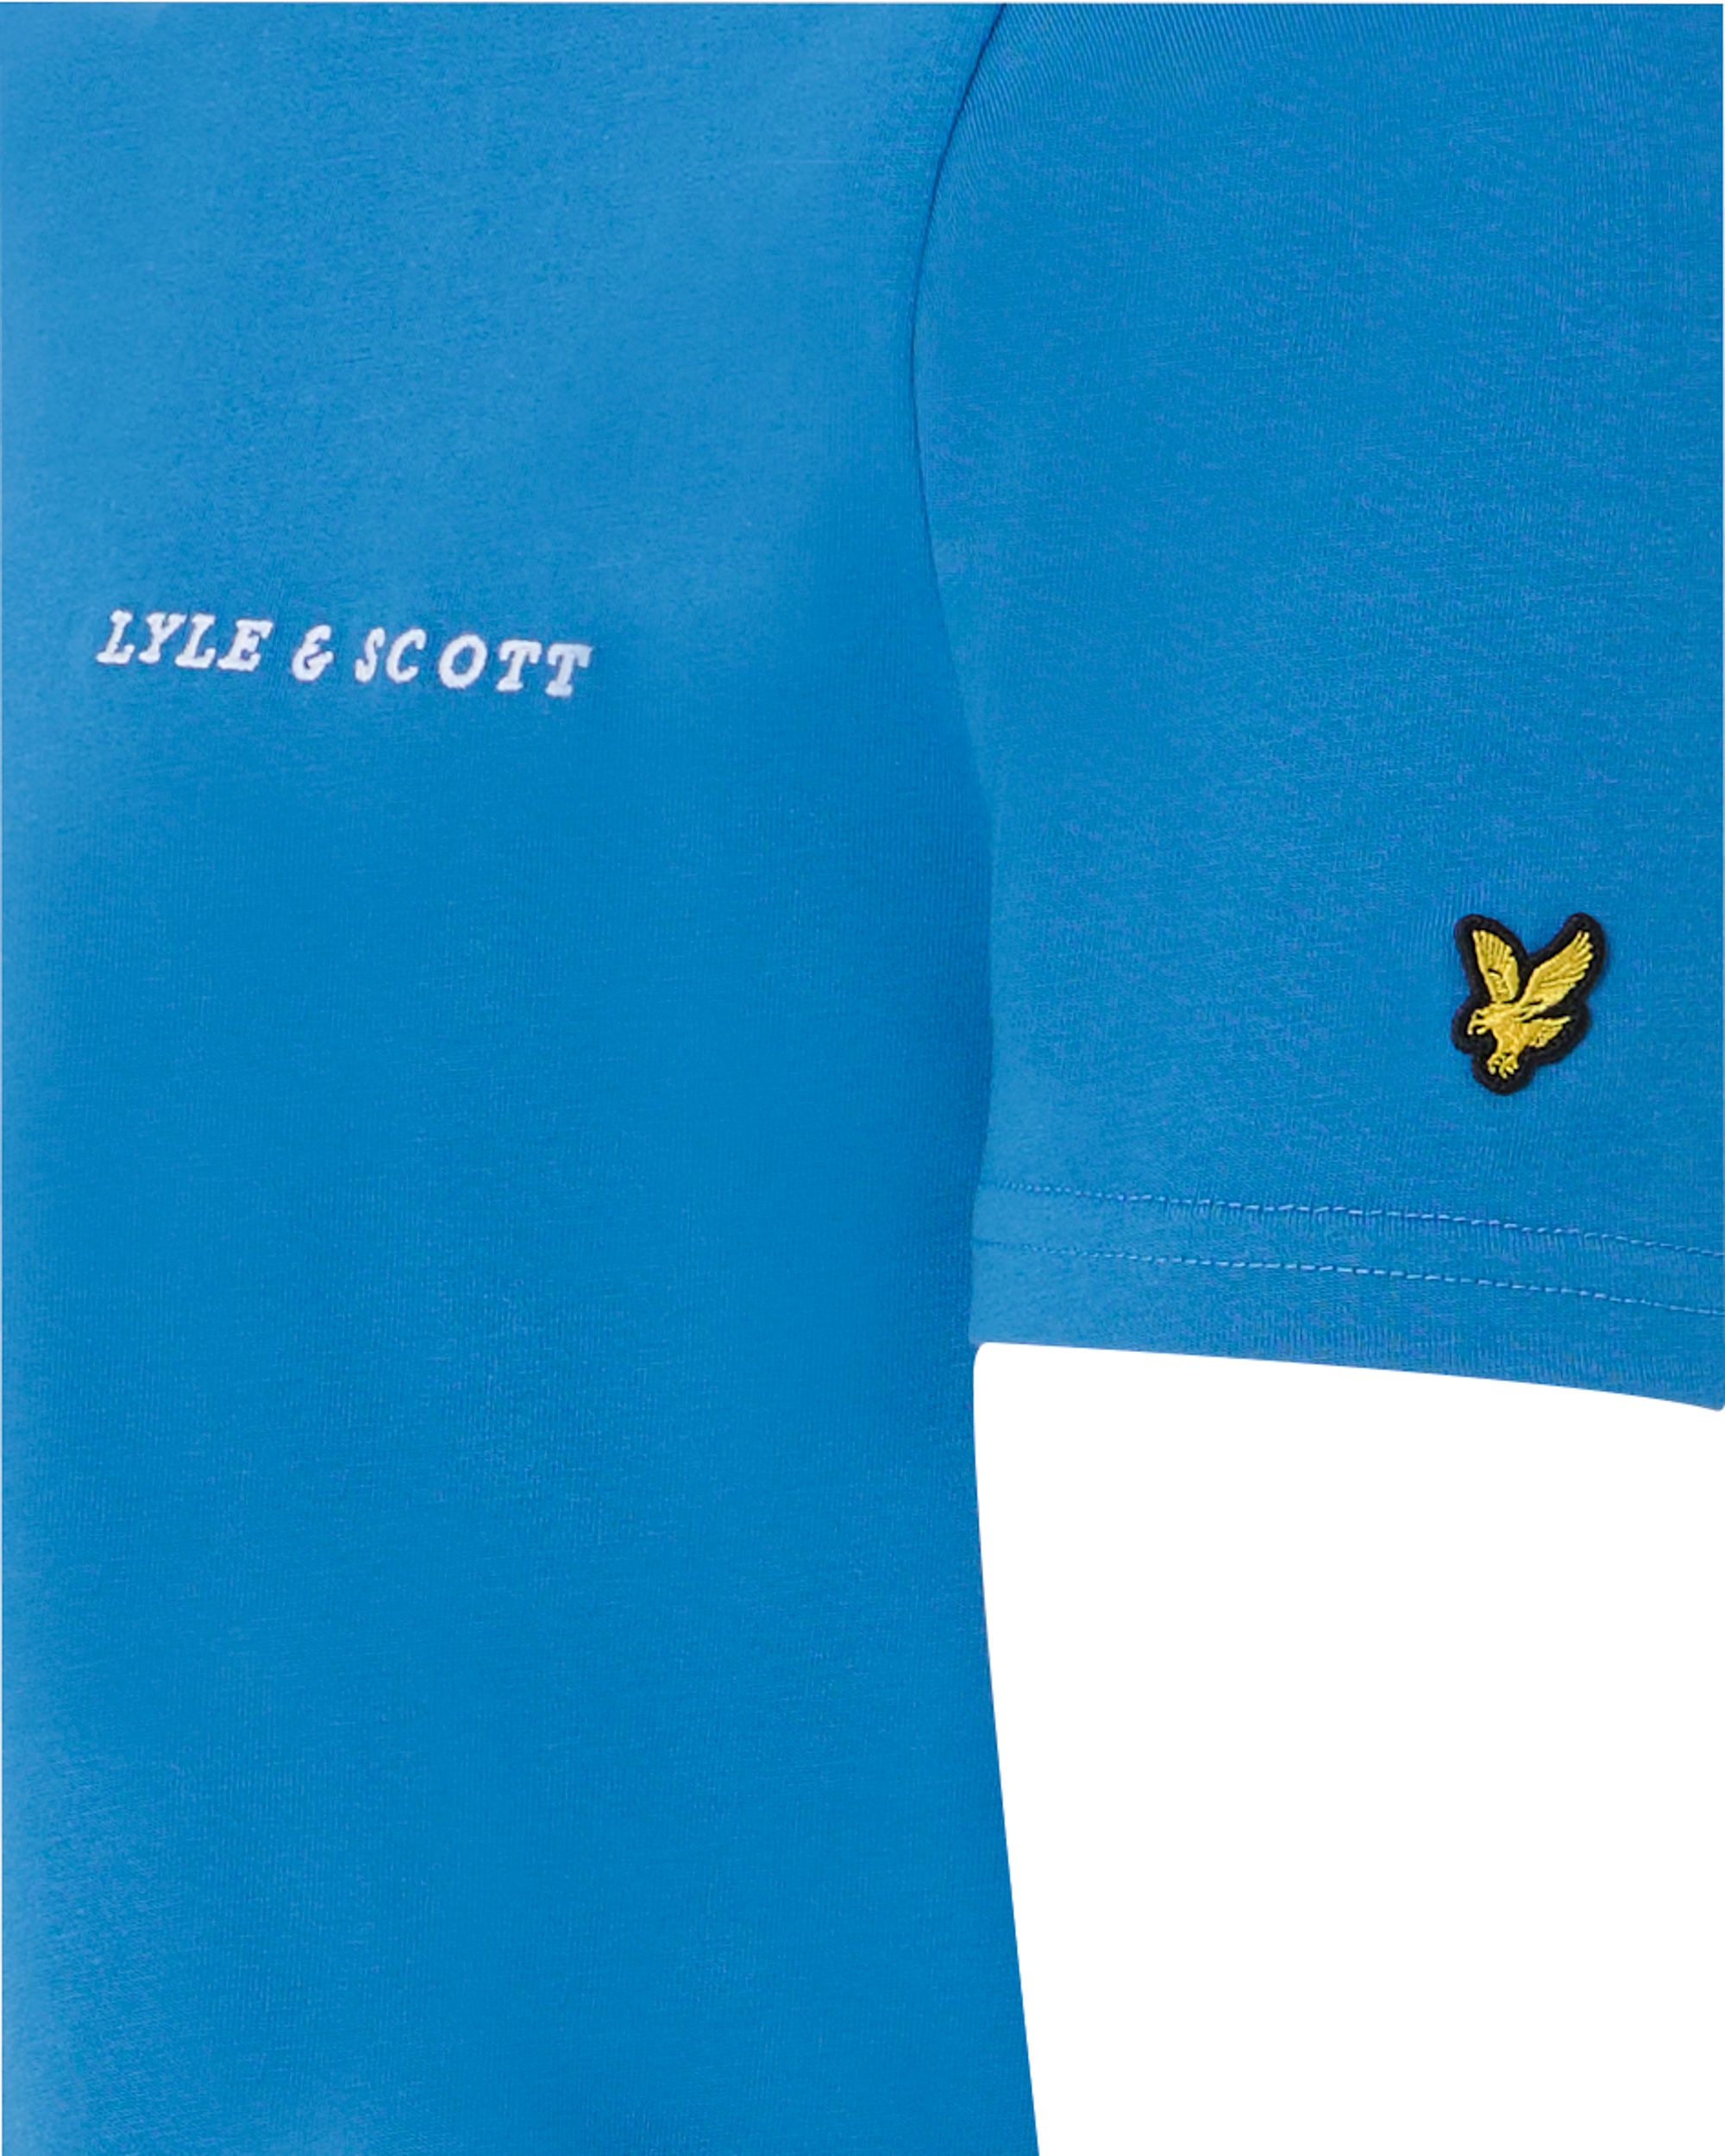 Lyle & Scott T-shirt KM Licht blauw 092268-001-L